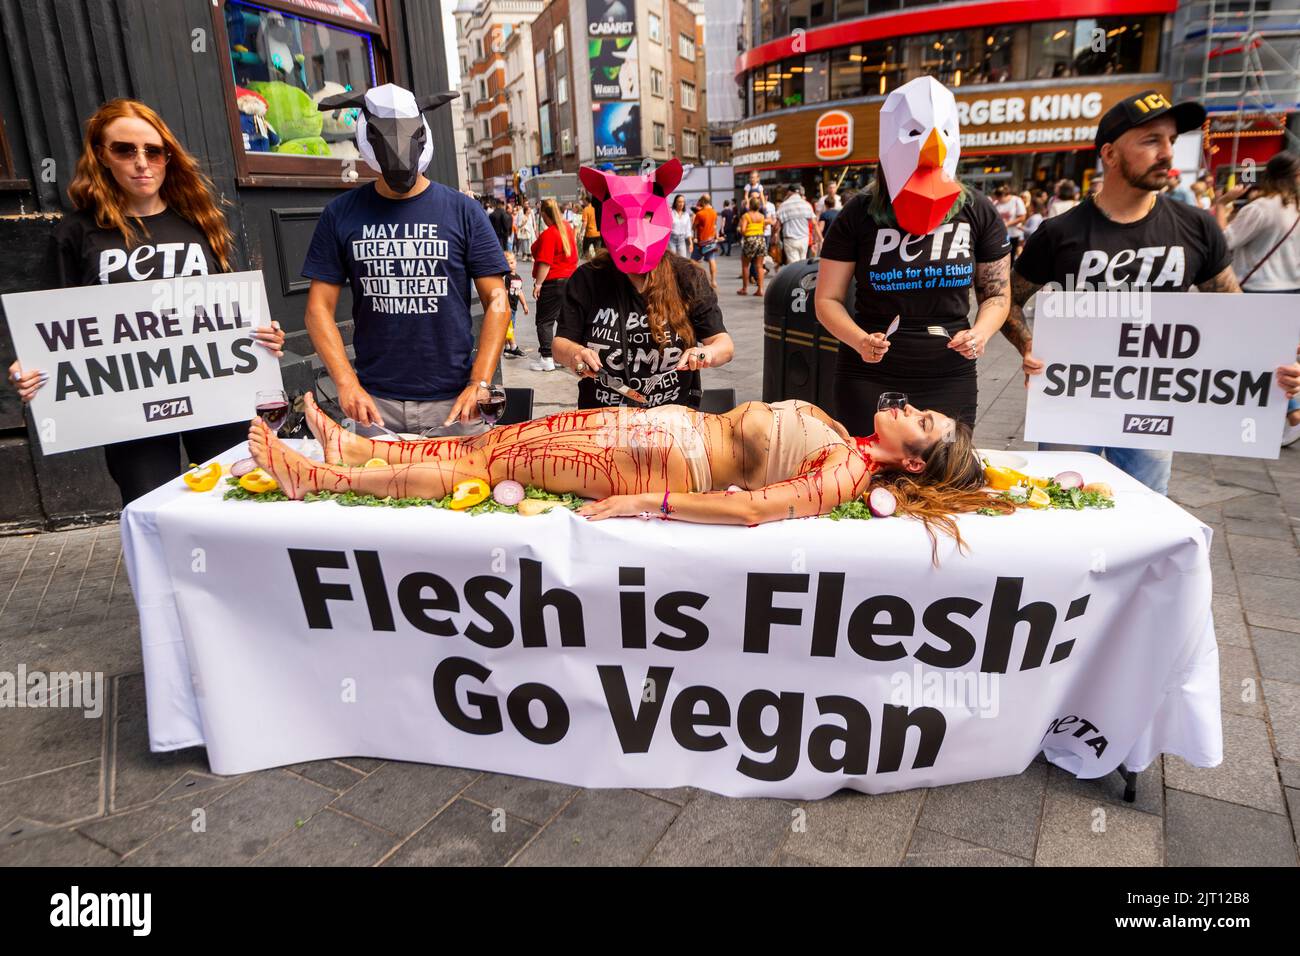 Vegan activist joins Tash Peterson PETA for animal rights protest